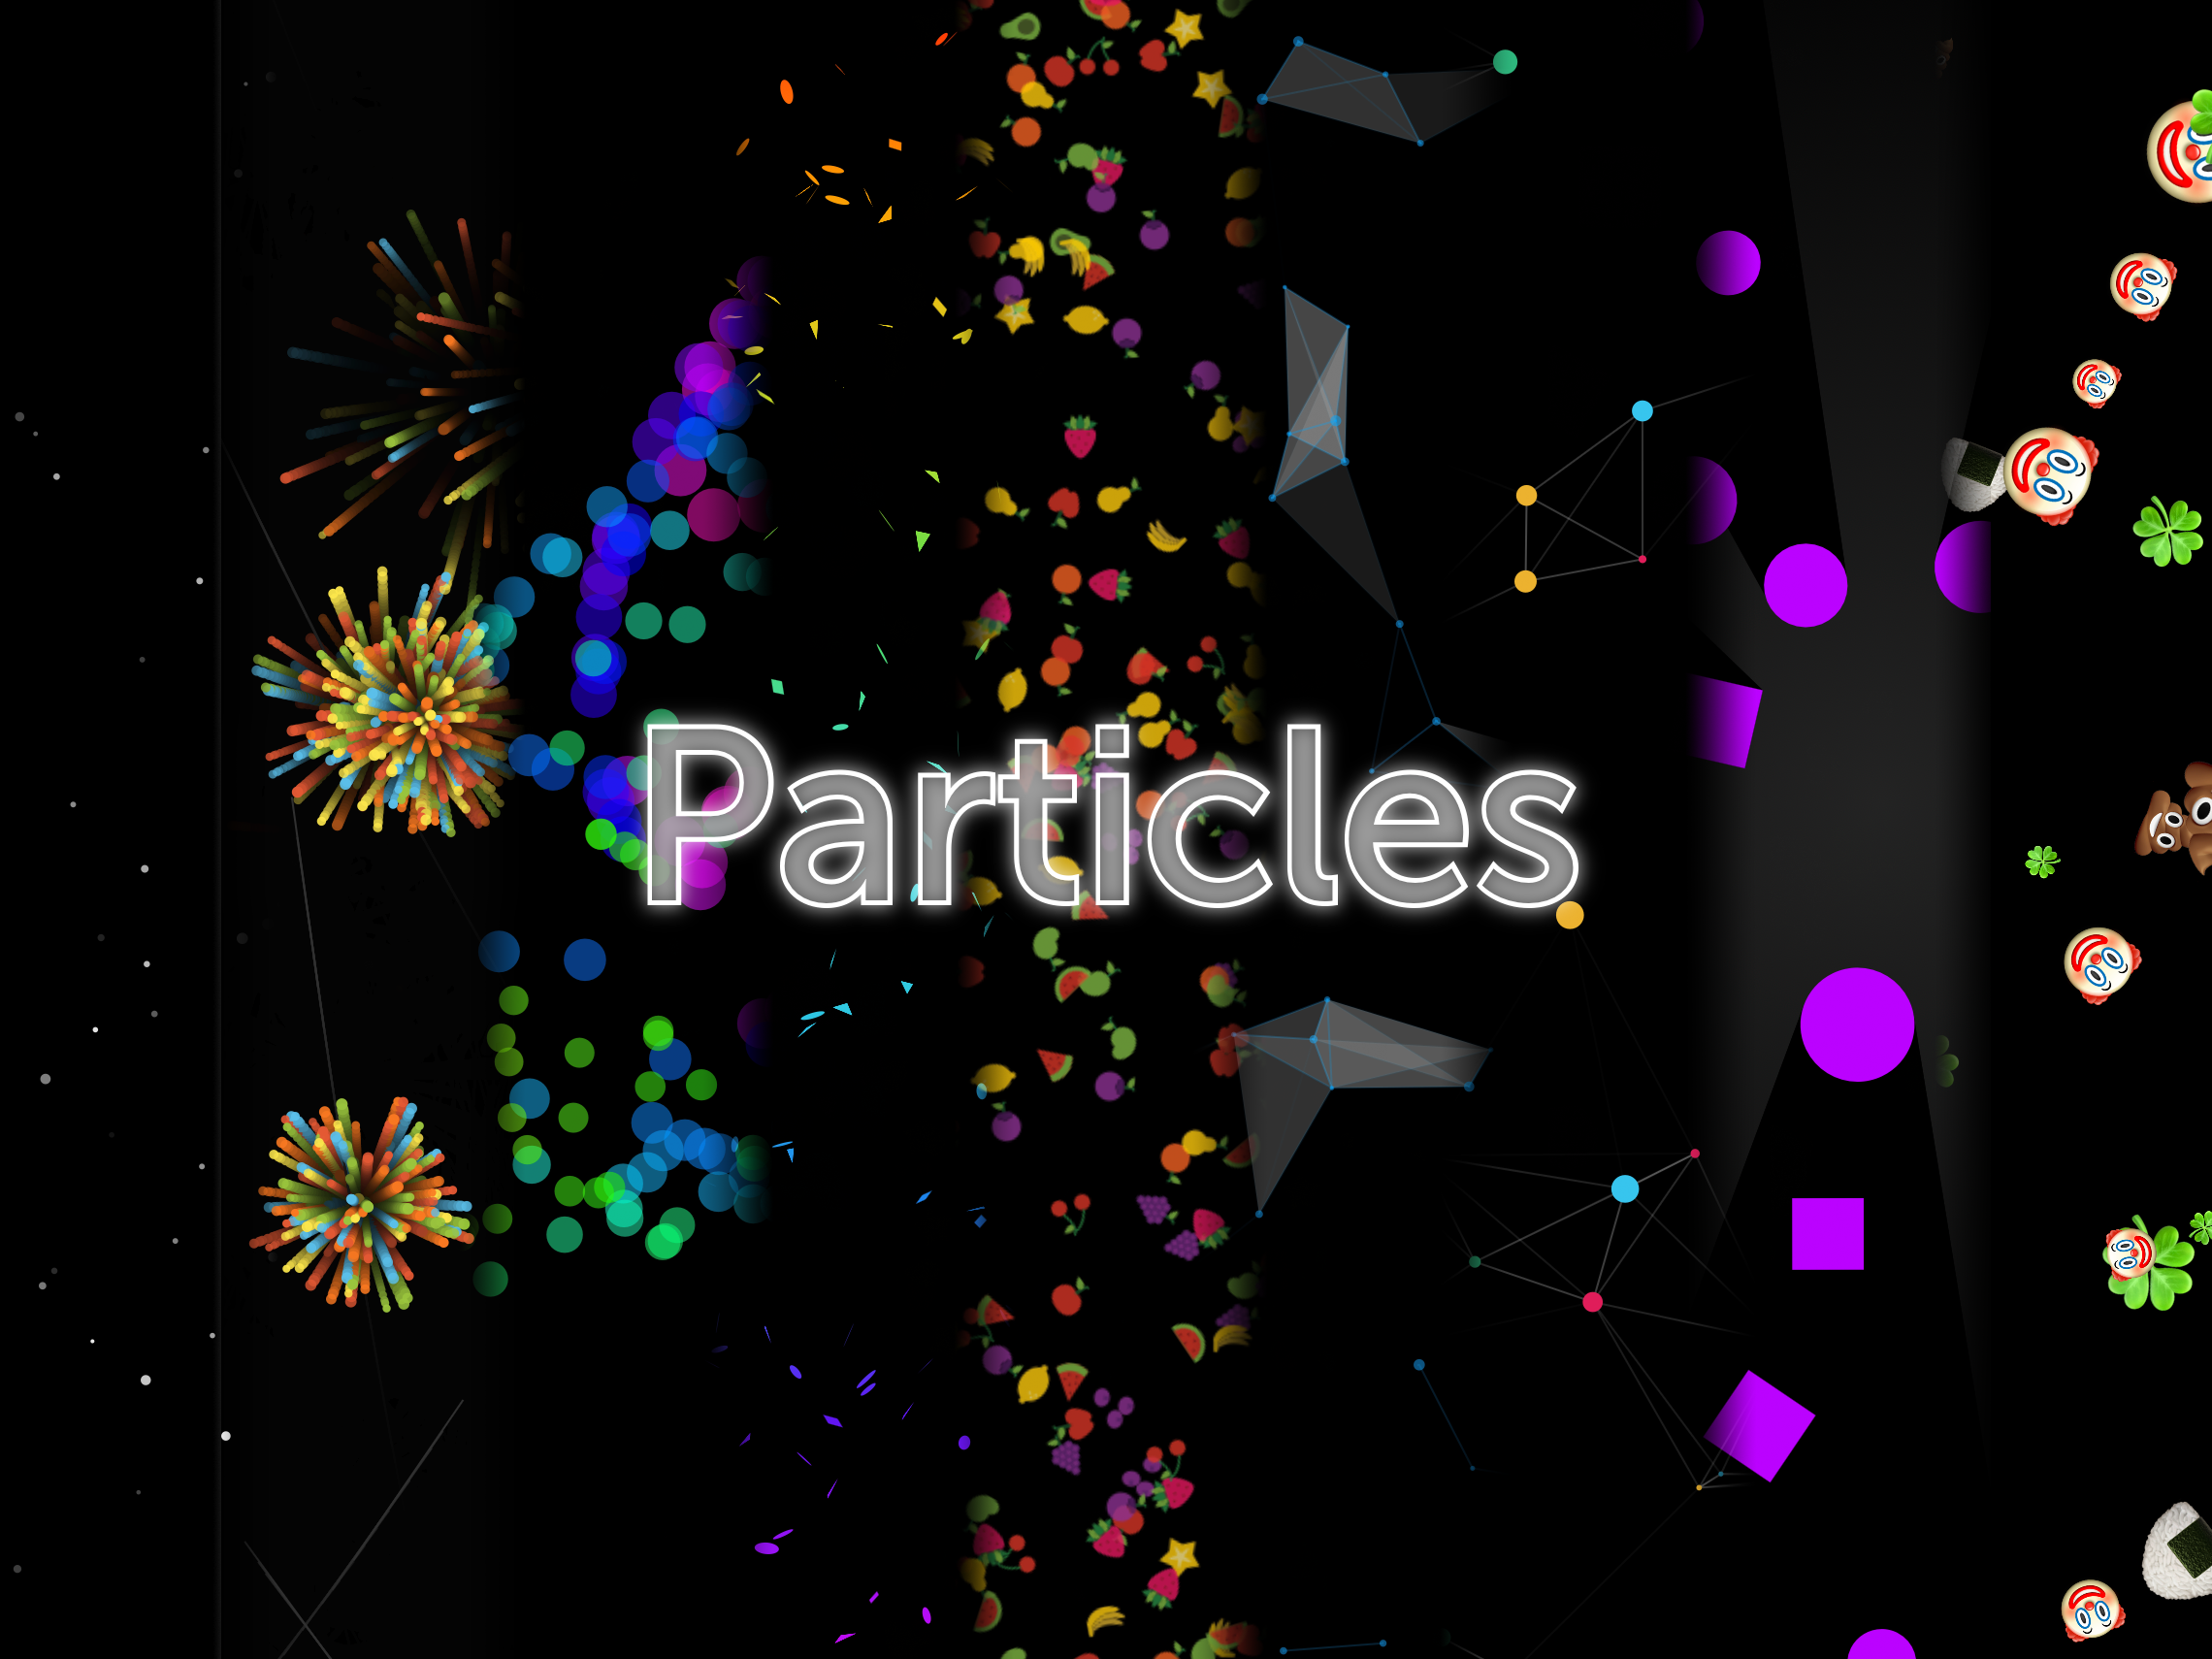 Particles demo